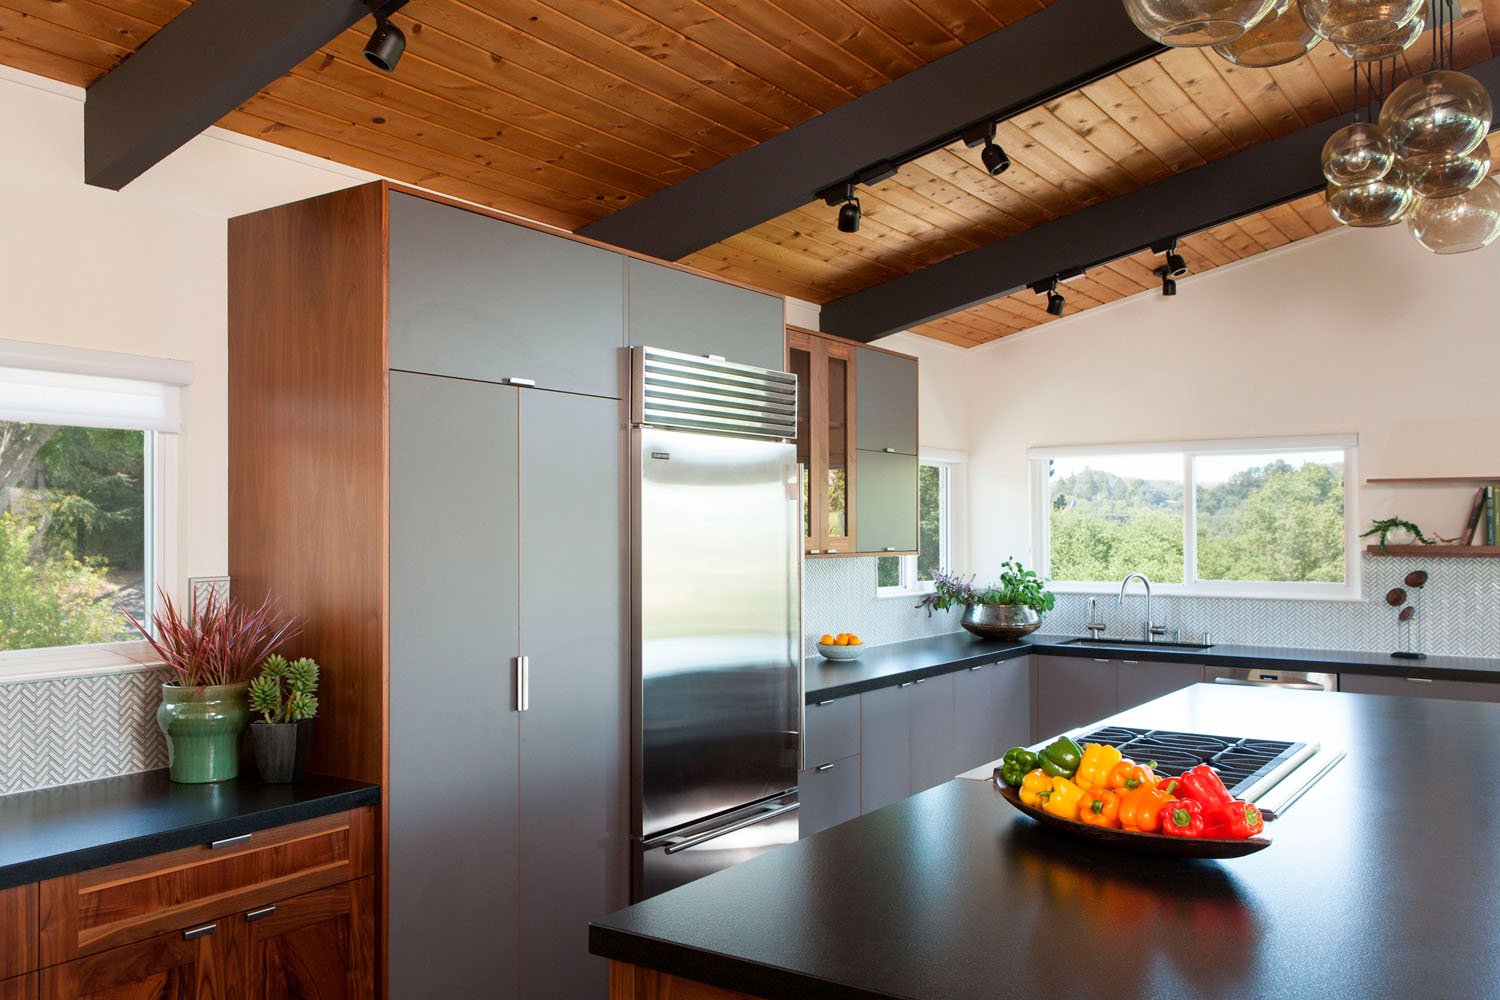 Zen Kitchen Design Pictures - Kitchens Design, Ideas And Renovation